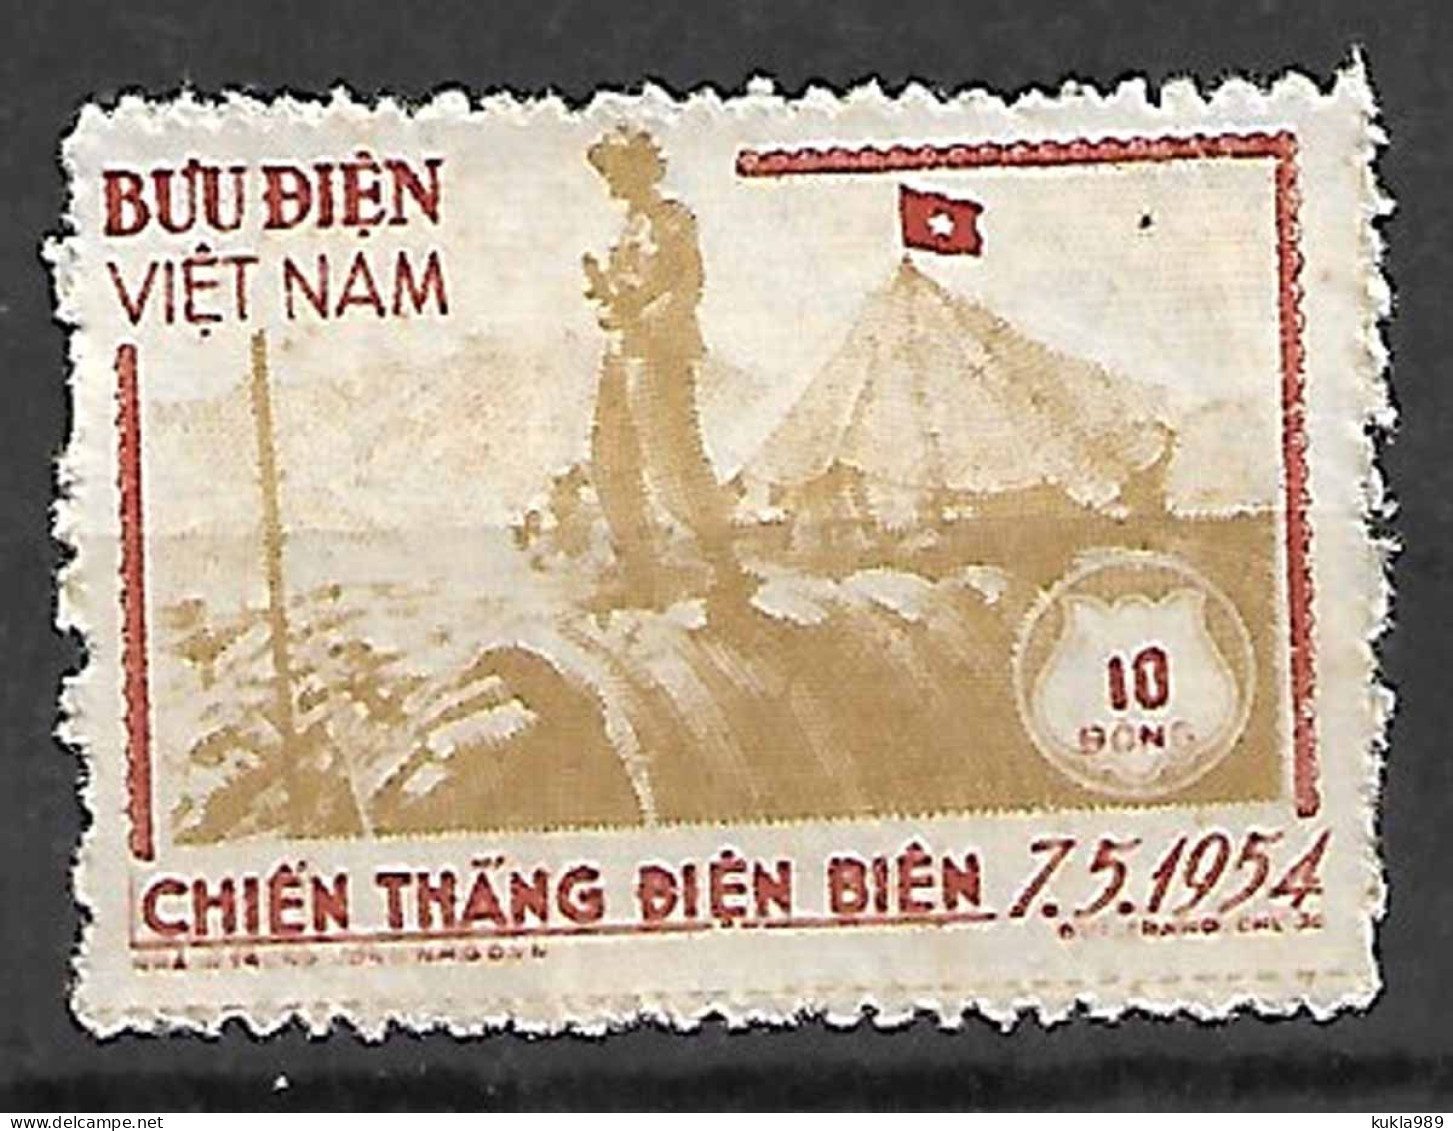 NORTH VIETNAM STAMPS 1954, VICTORY AT DIEN BIEN PHU, Sc.#17, MNH - Vietnam